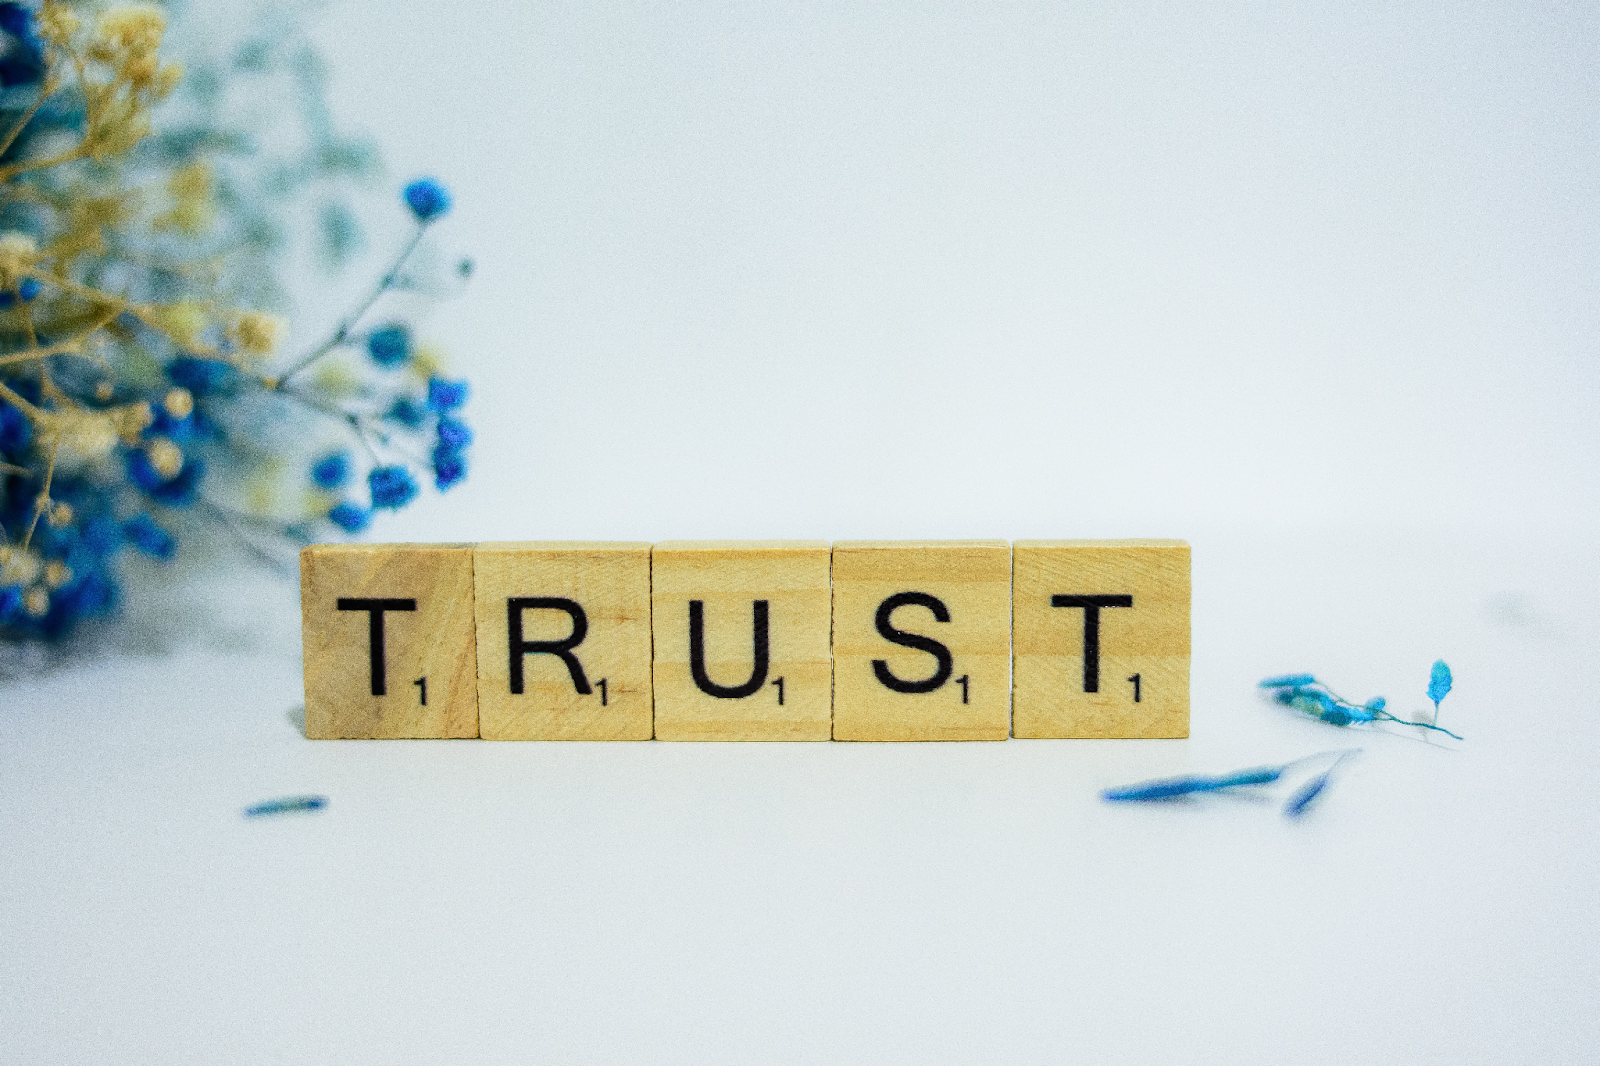 trust work trust in the workplace